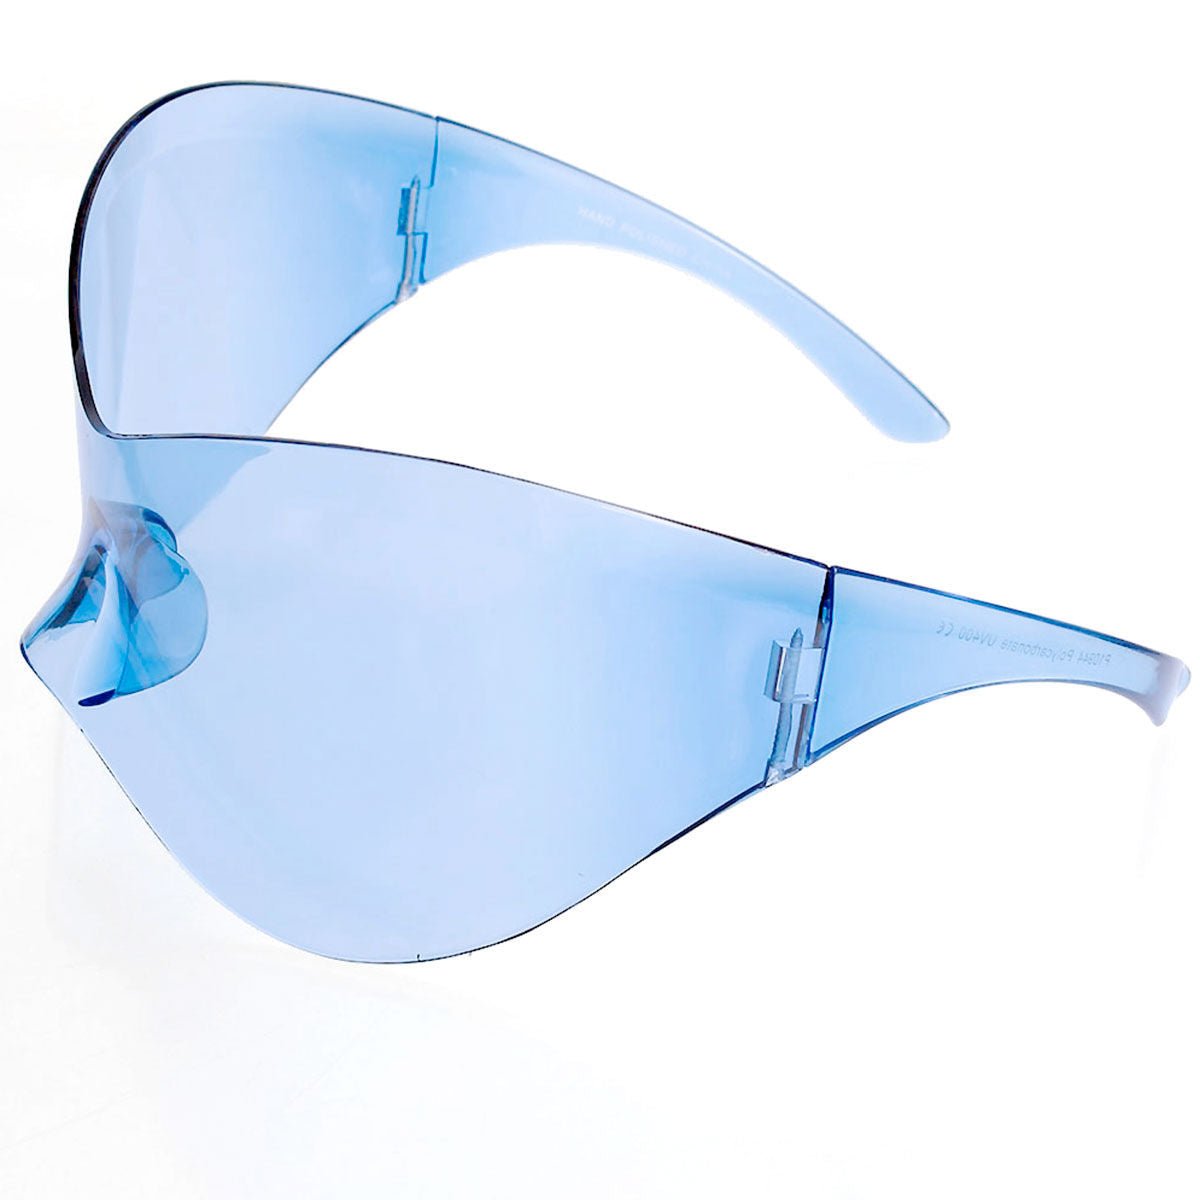 Sunglasses Mask Wrap Blue Eyewear for Women - Bae Apparel